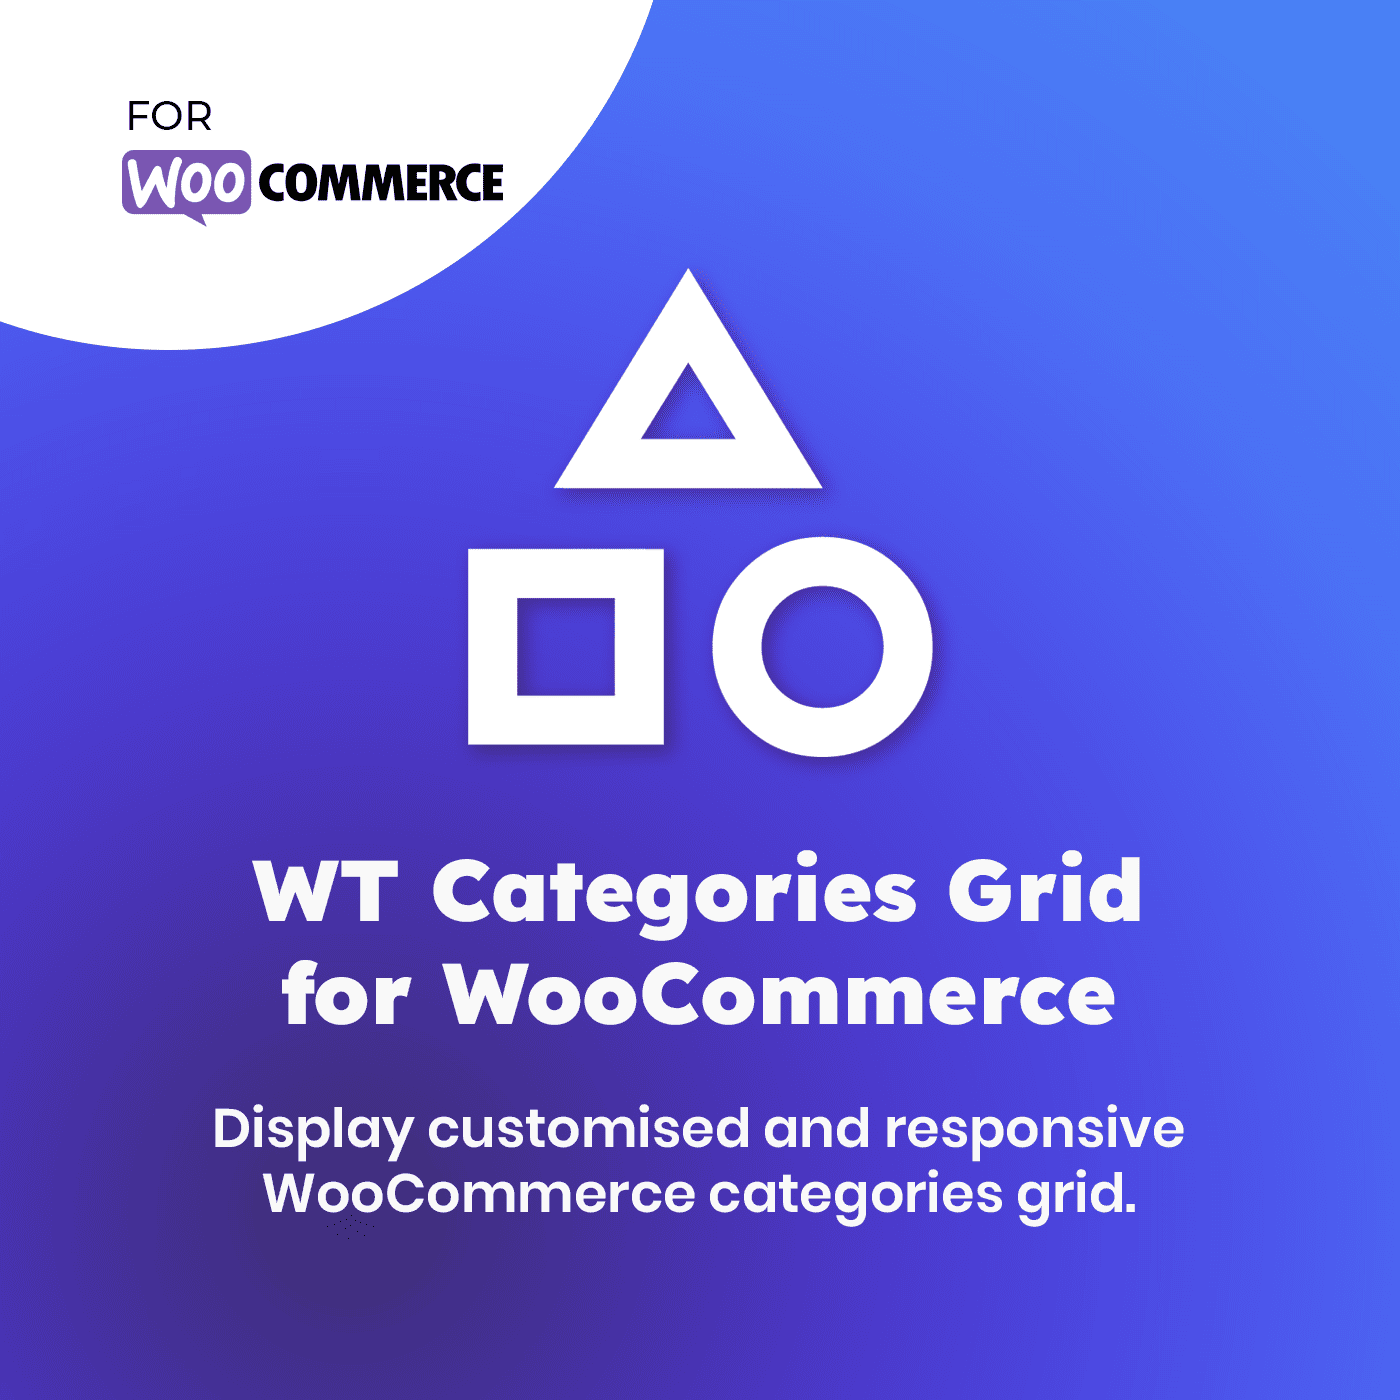 WT Categories Grid for WooCommerce - WordPress Plugin for WooCommerce